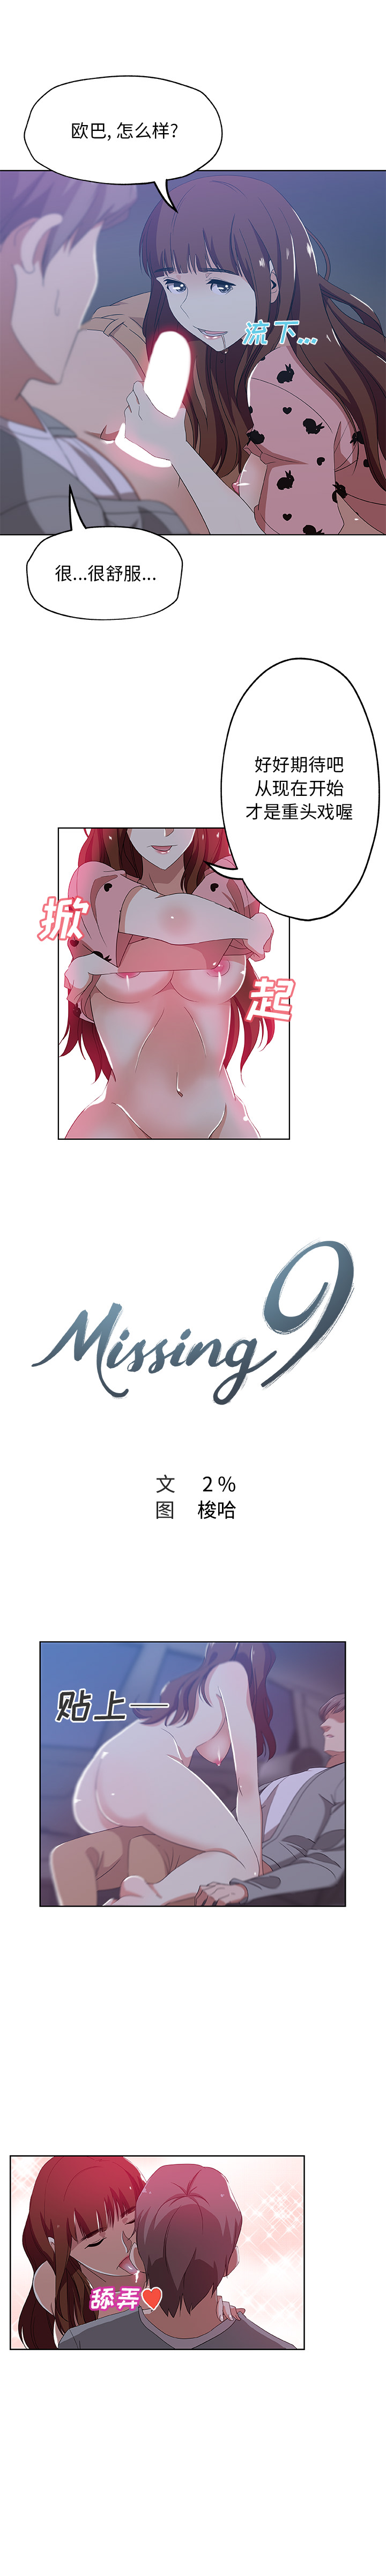 Missing9[抖漫]-Missing9-第 6 章全彩韩漫标签